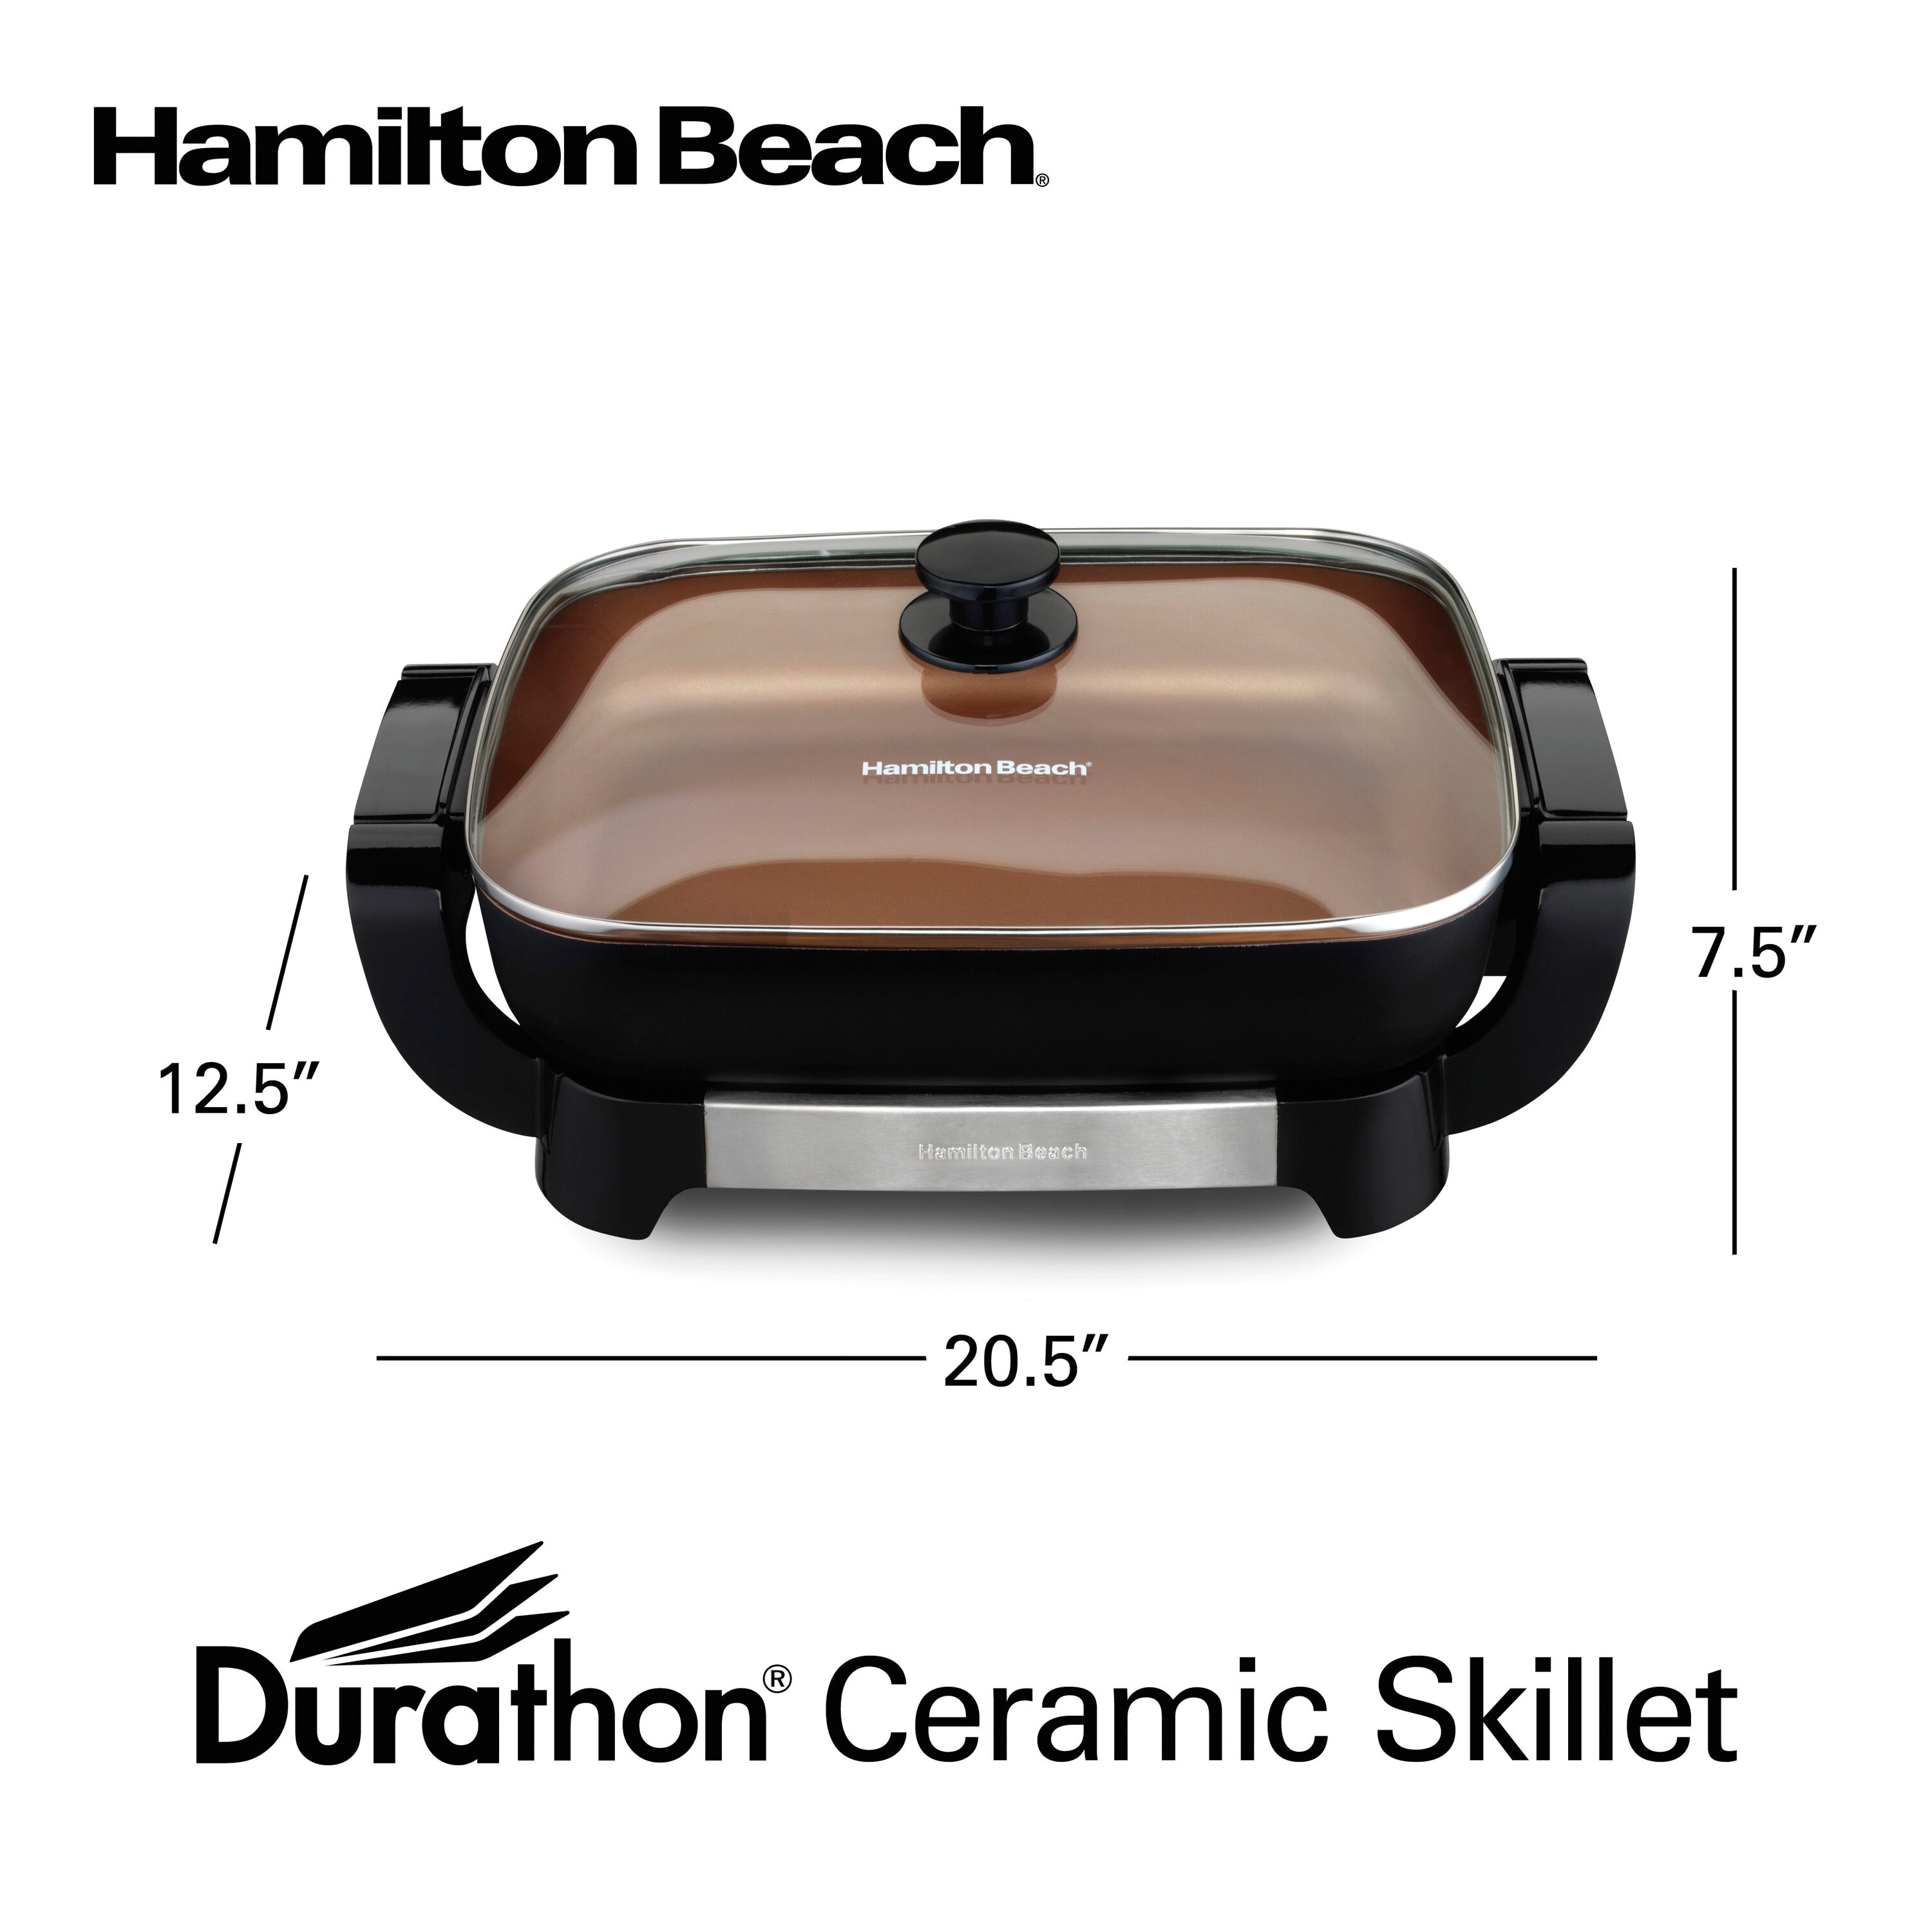 Hamilton Beach Durathon Ceramic Skillet with Removable Pan Copper